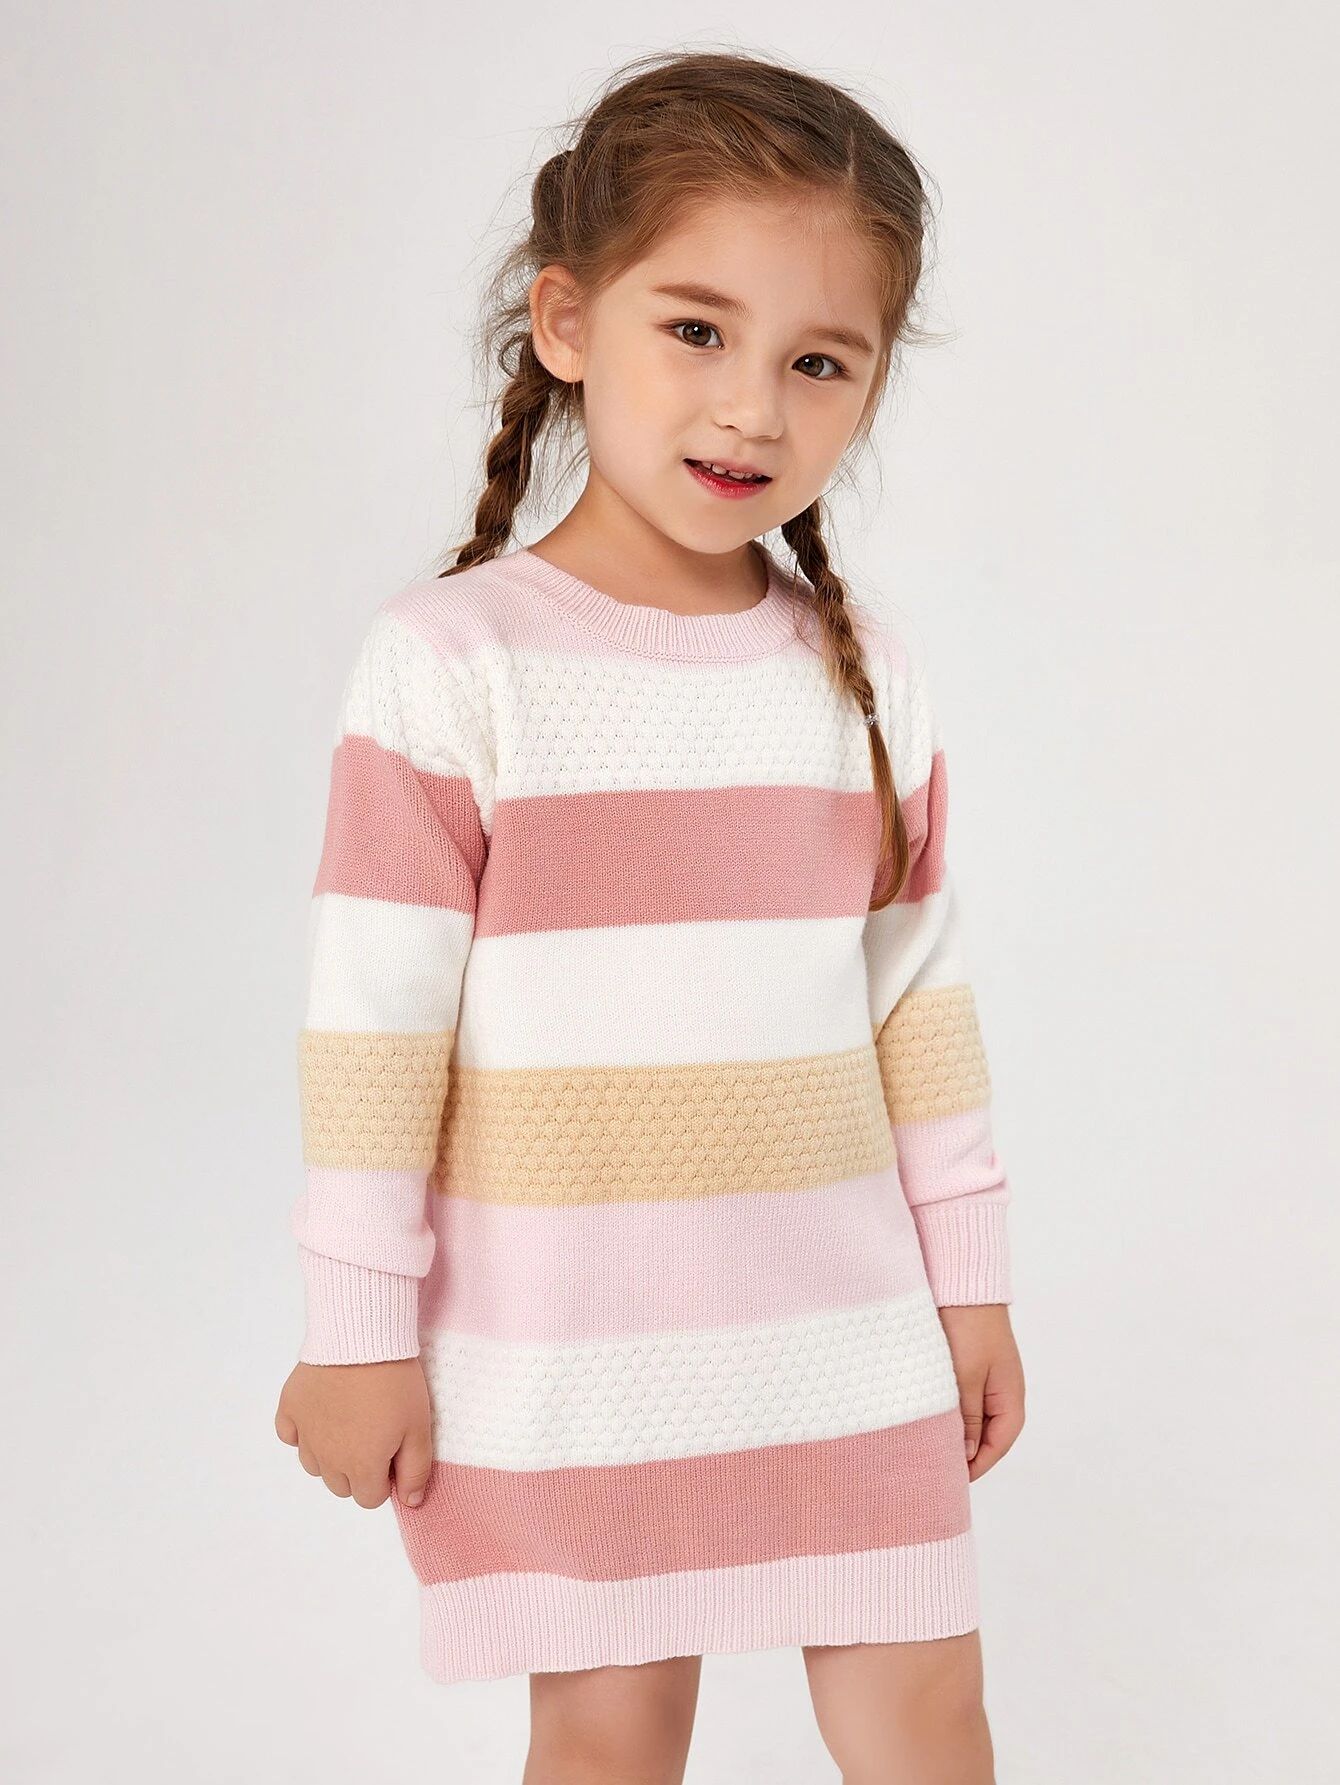 SHEIN Toddler Girls Colorblock Sweater Dress | SHEIN